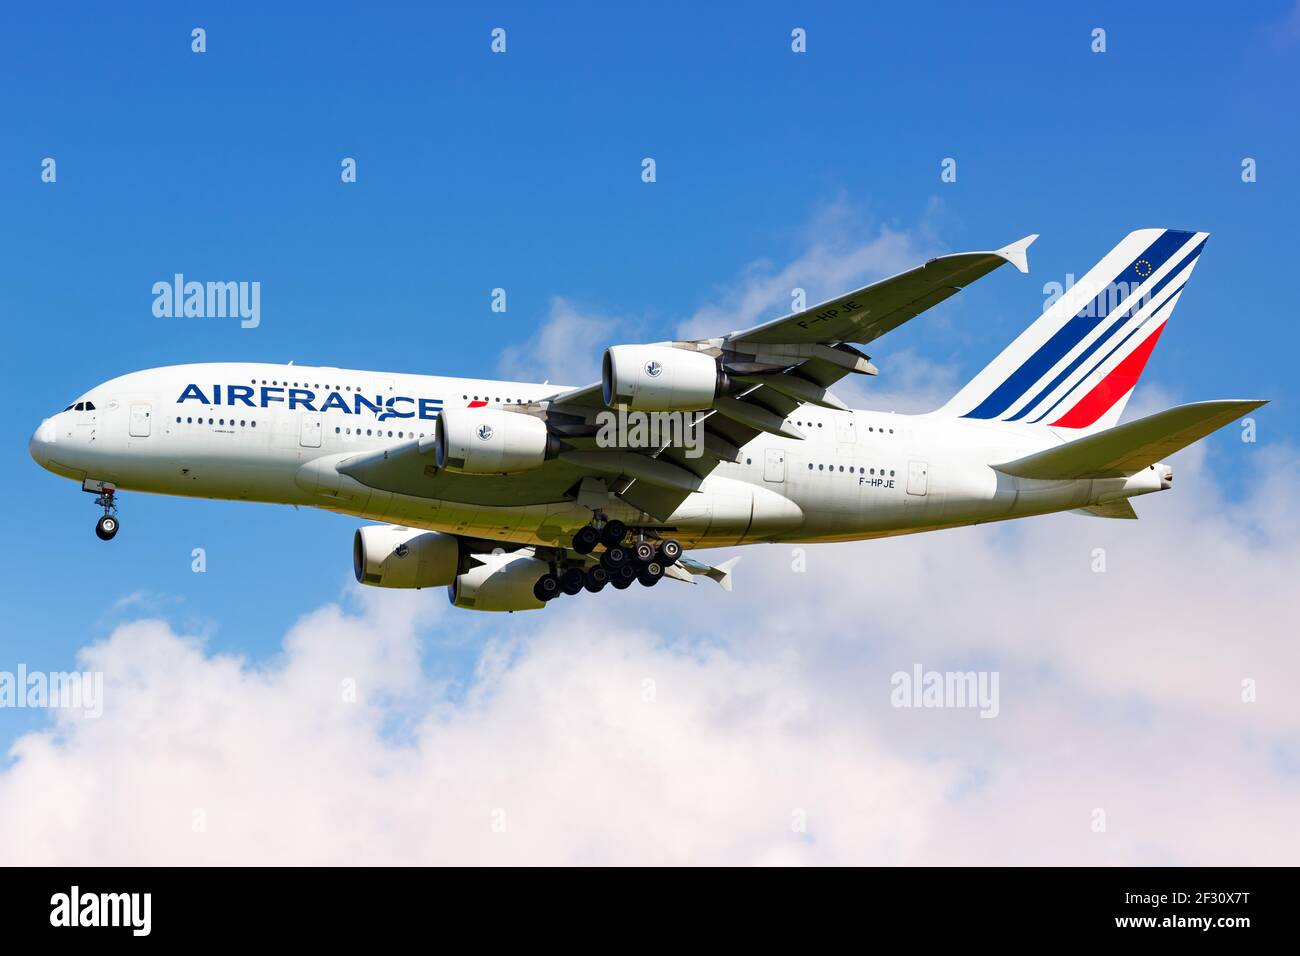 Paris, Frankreich - 17. August 2018: Air France Airbus A380 Flugzeug am Flughafen Paris Charles de Gaulle in Frankreich. Stockfoto